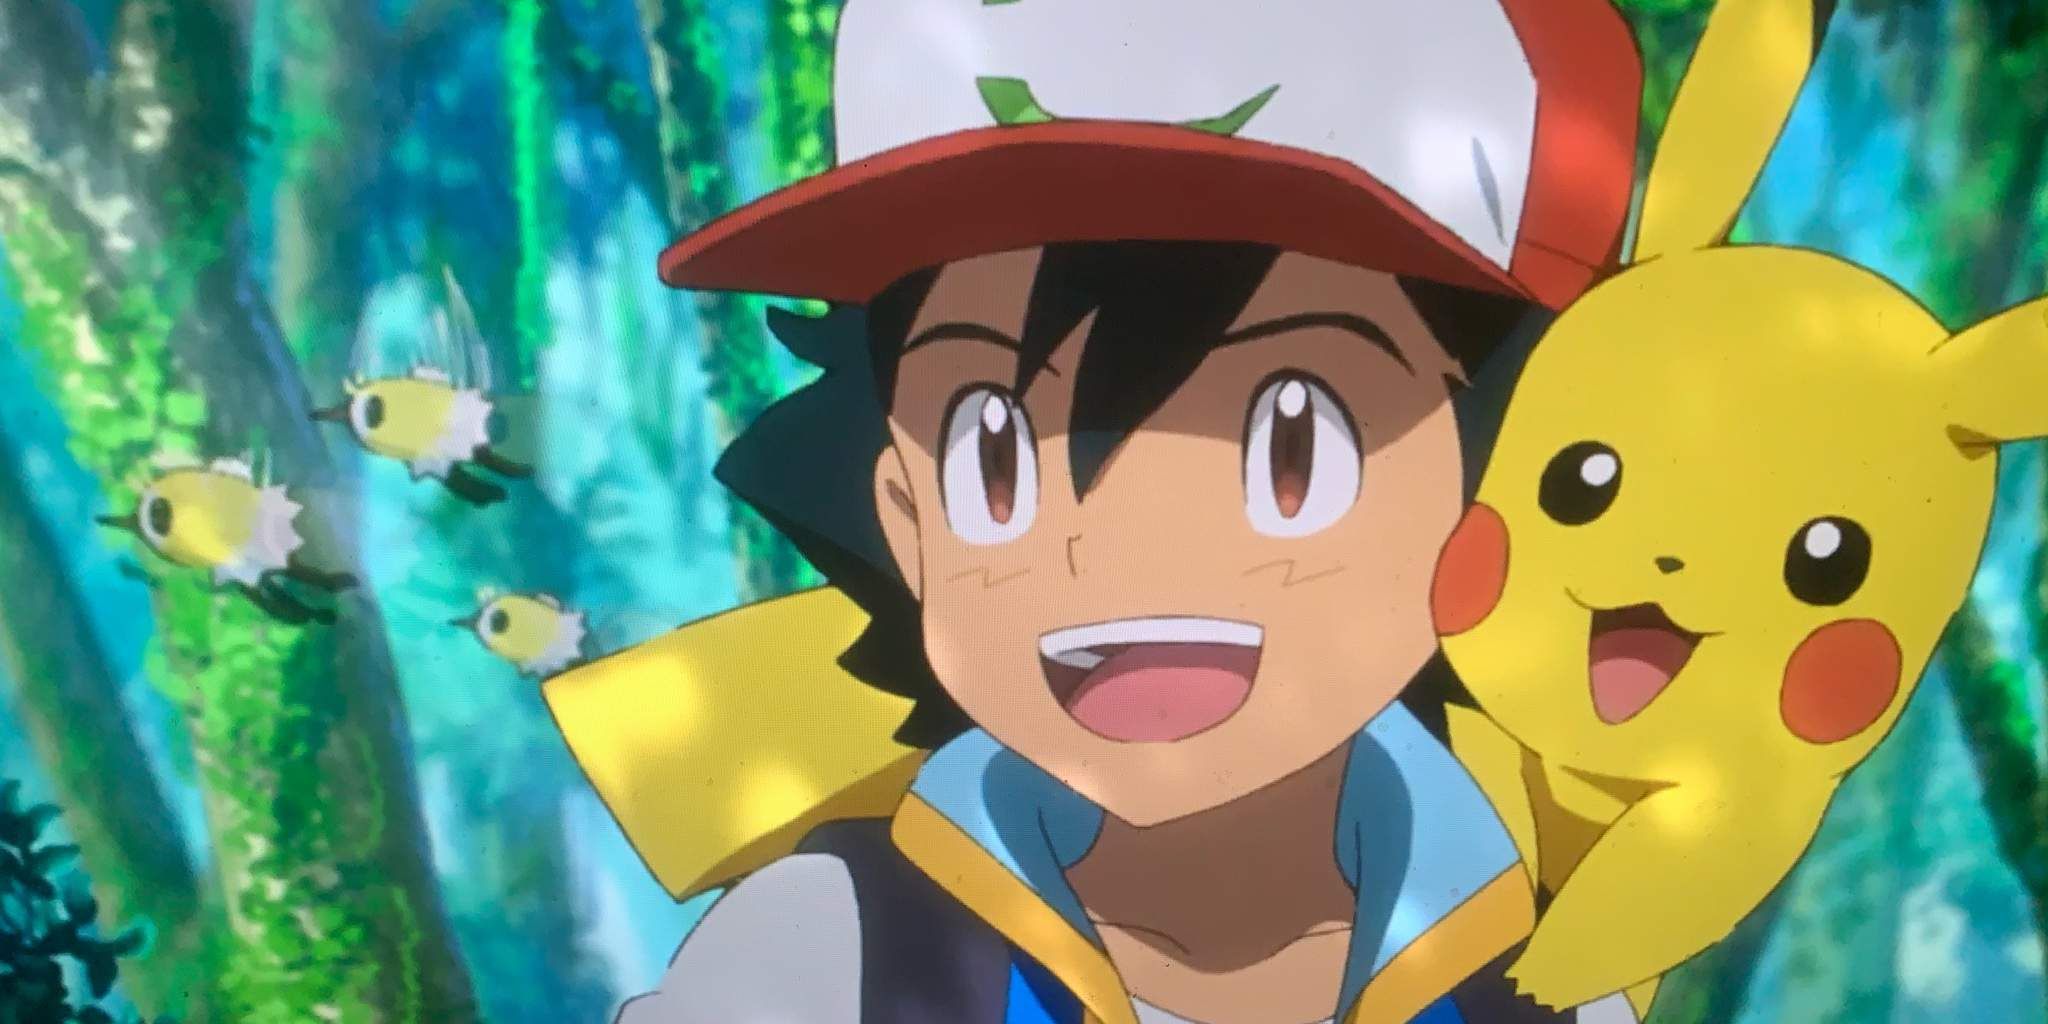 Pokémon Theory: Ashs Name Hints at His Future Career